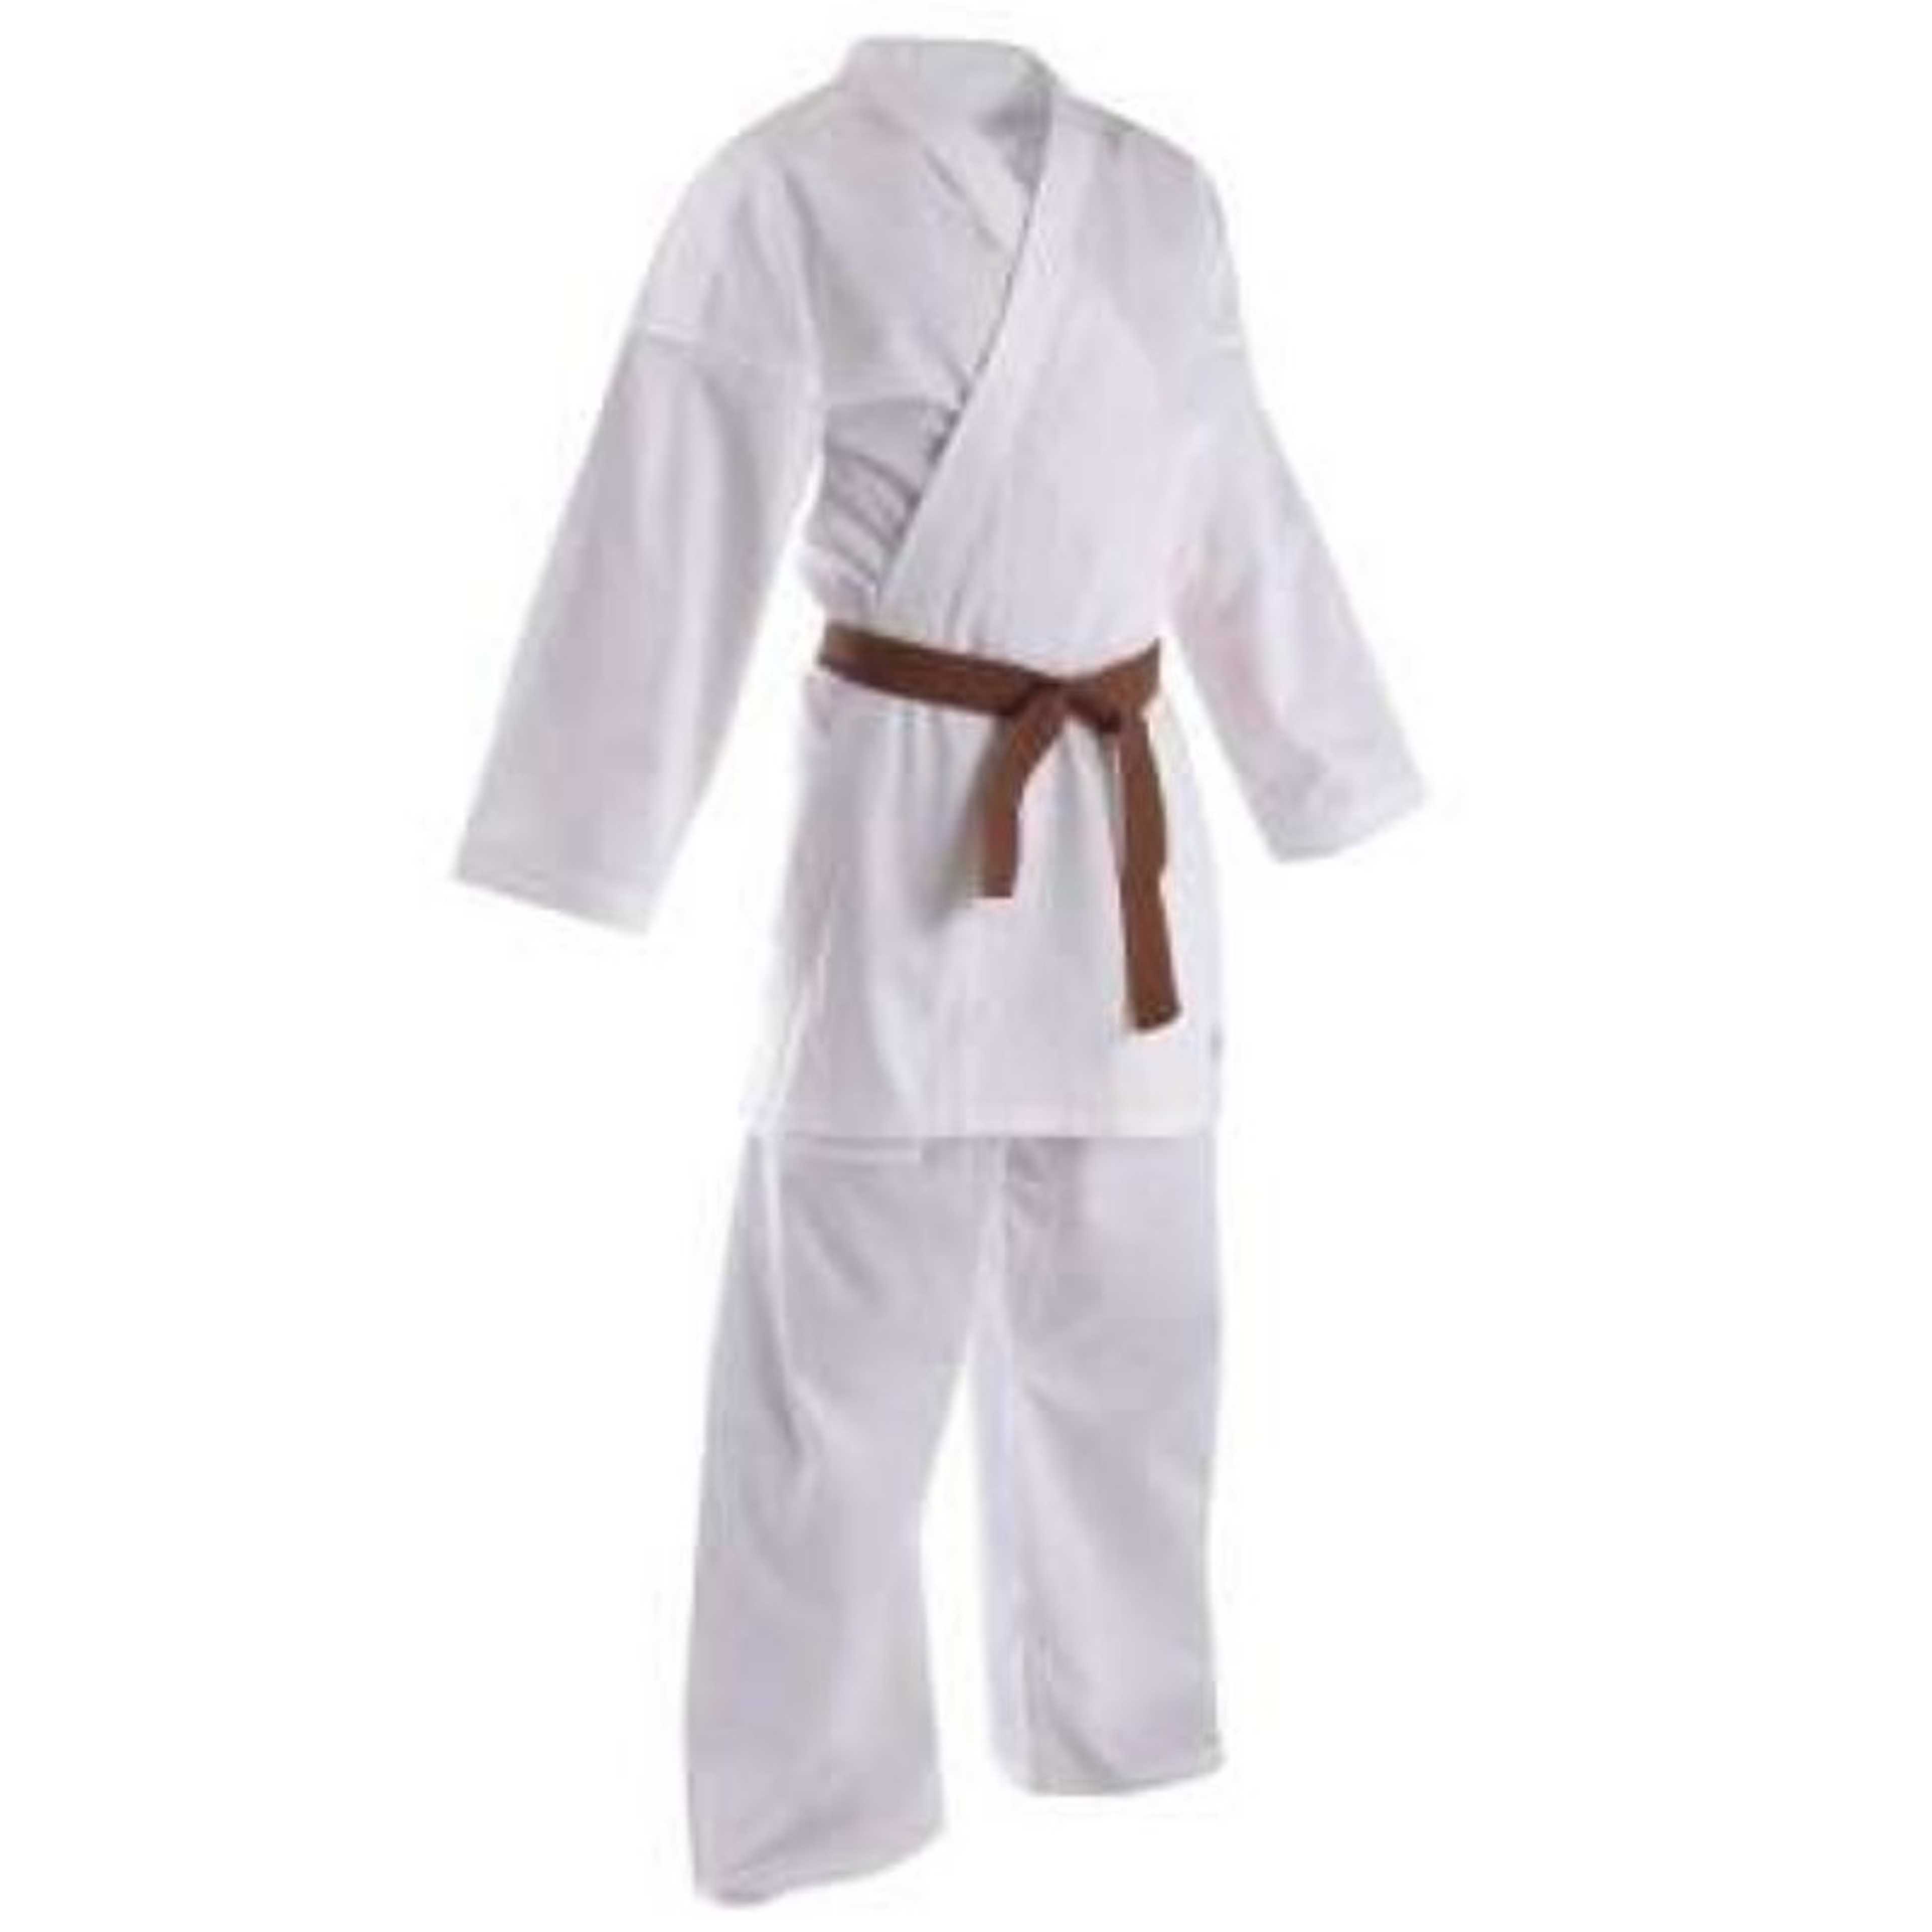 Karate Dress Kits No 4 with Brown Belt